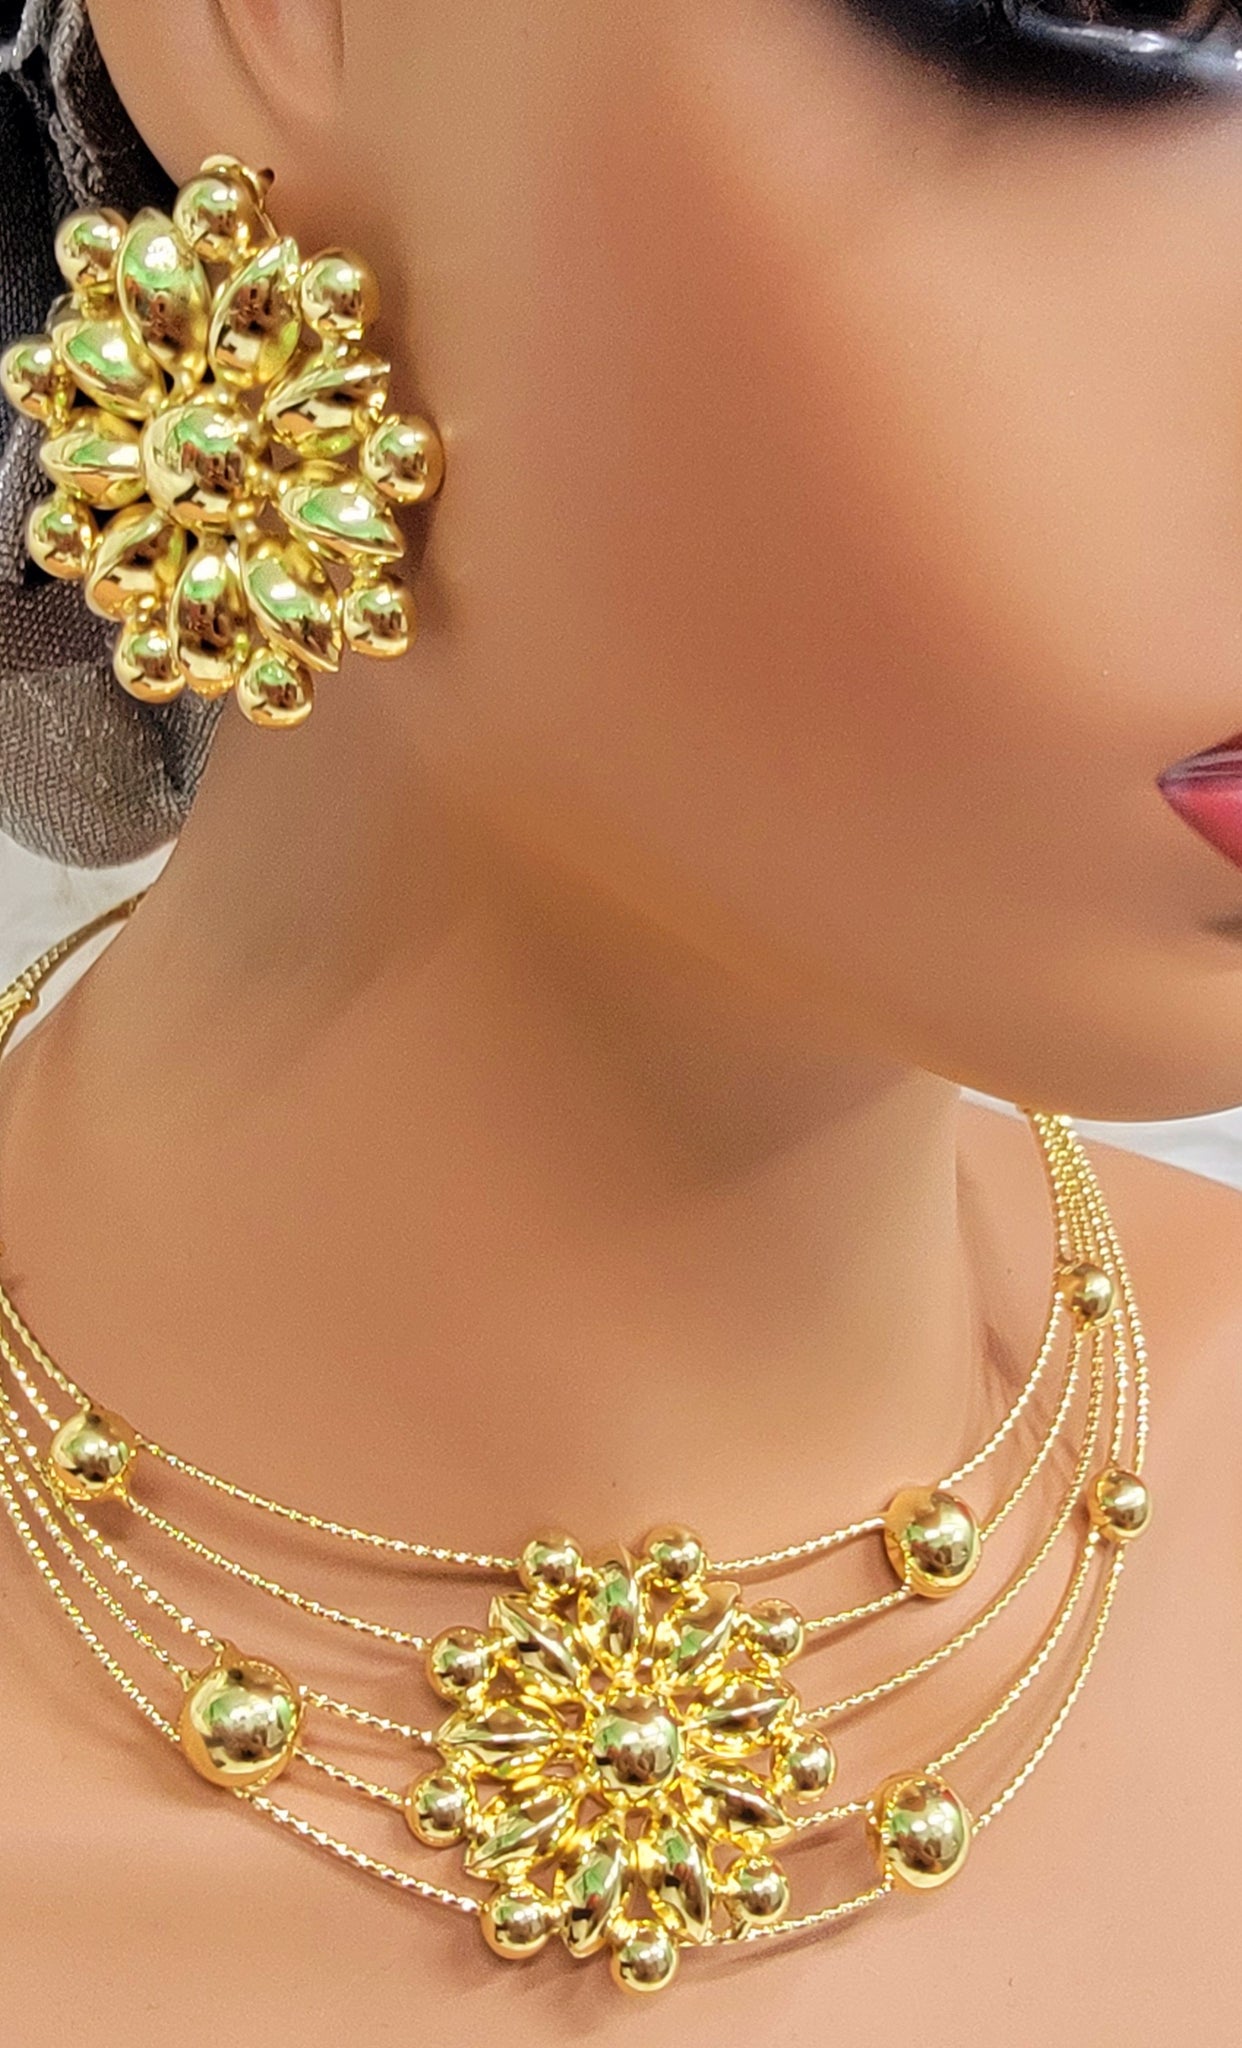 Beautiful women dressing jewelry - Godshandfashion -